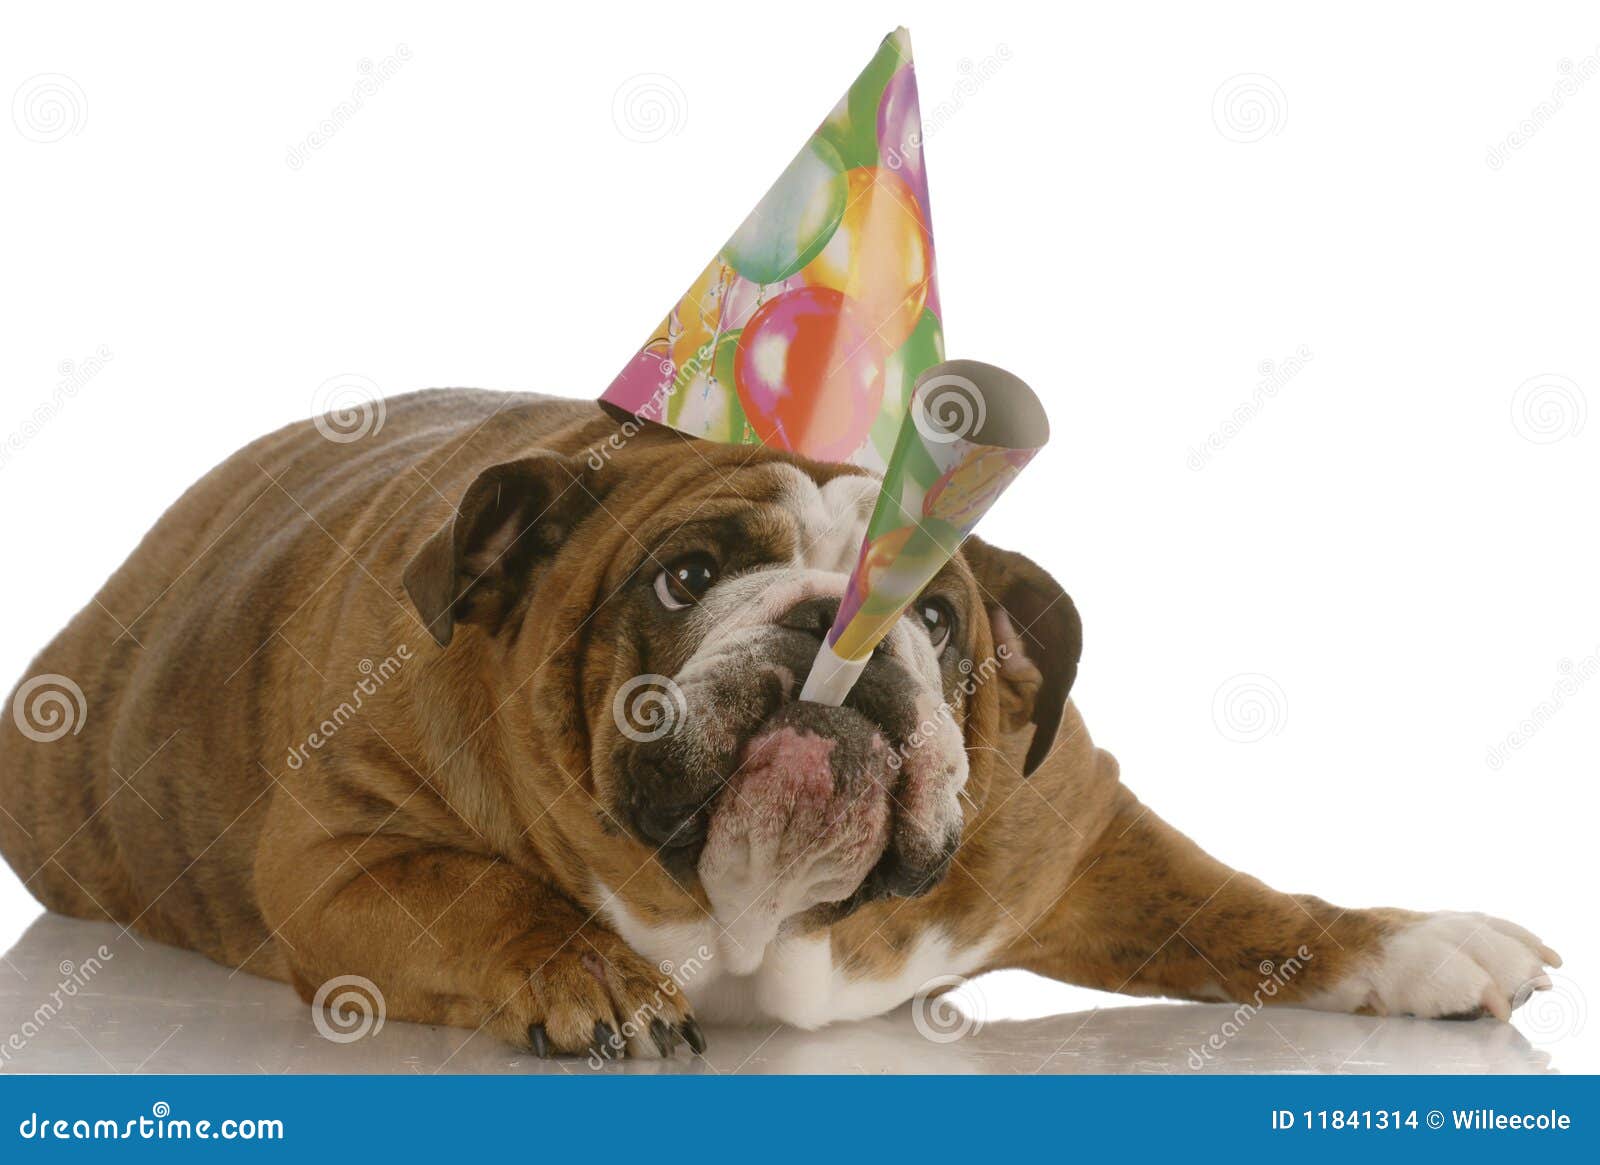 birthday dog blowing horn